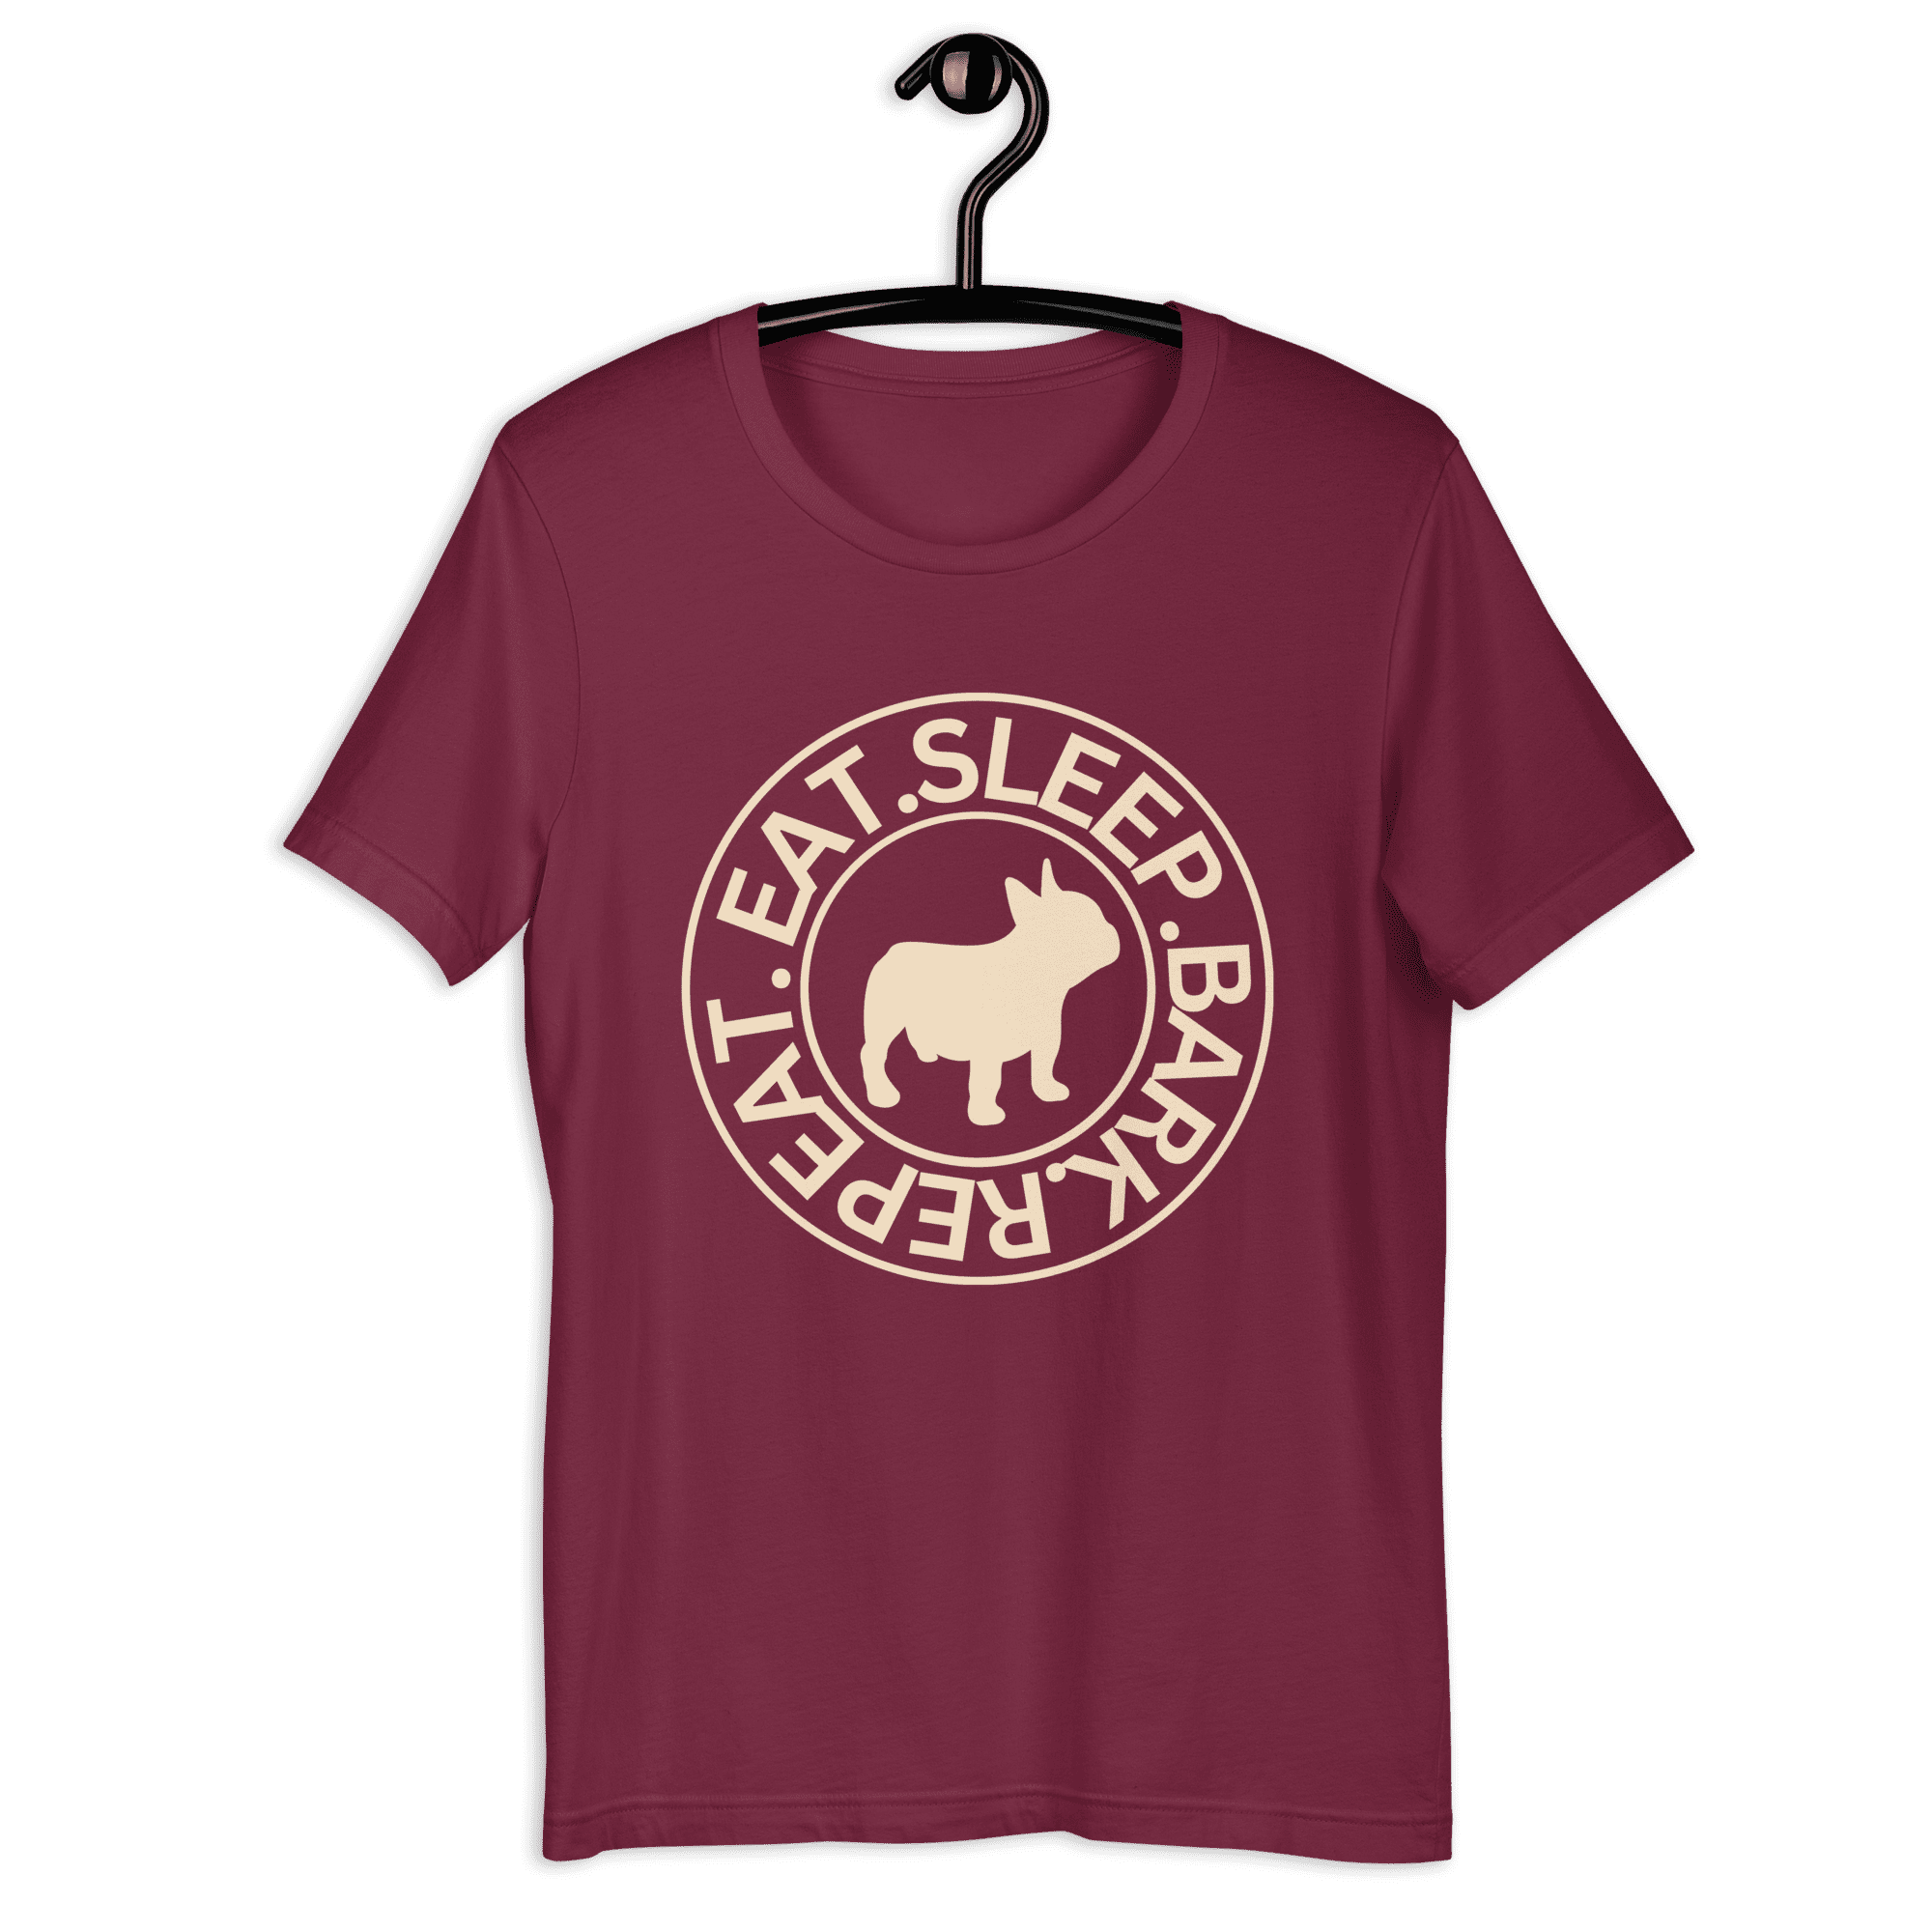 The "Eat Sleep Bark Repeat" French Bulldog Unisex T-Shirt. Maroon